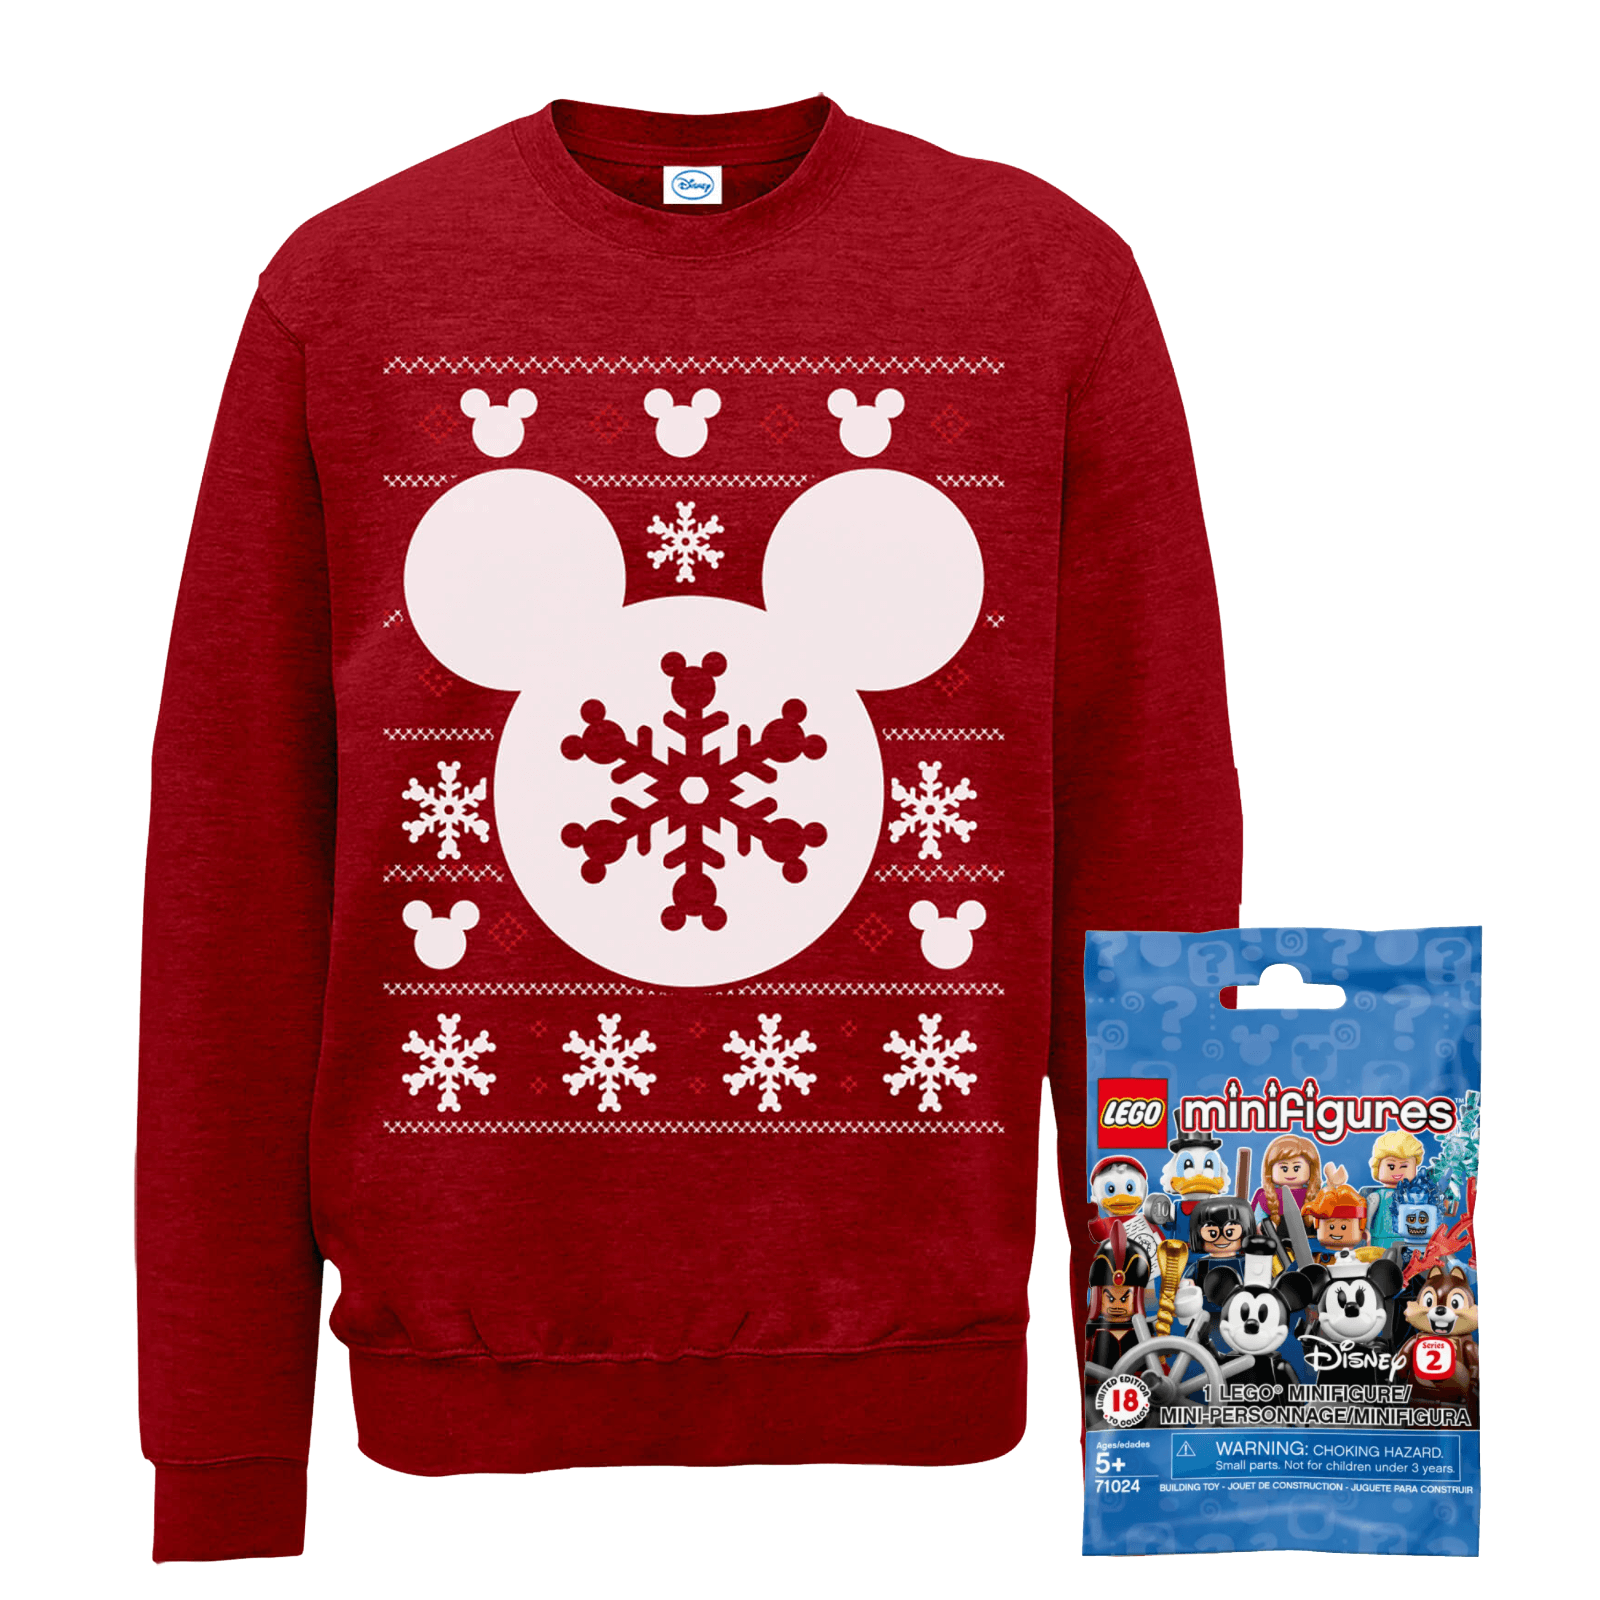 Disney Christmas Sweatshirt & Lego Minifigure Bundle - Kids' - 11-12 Years von Disney